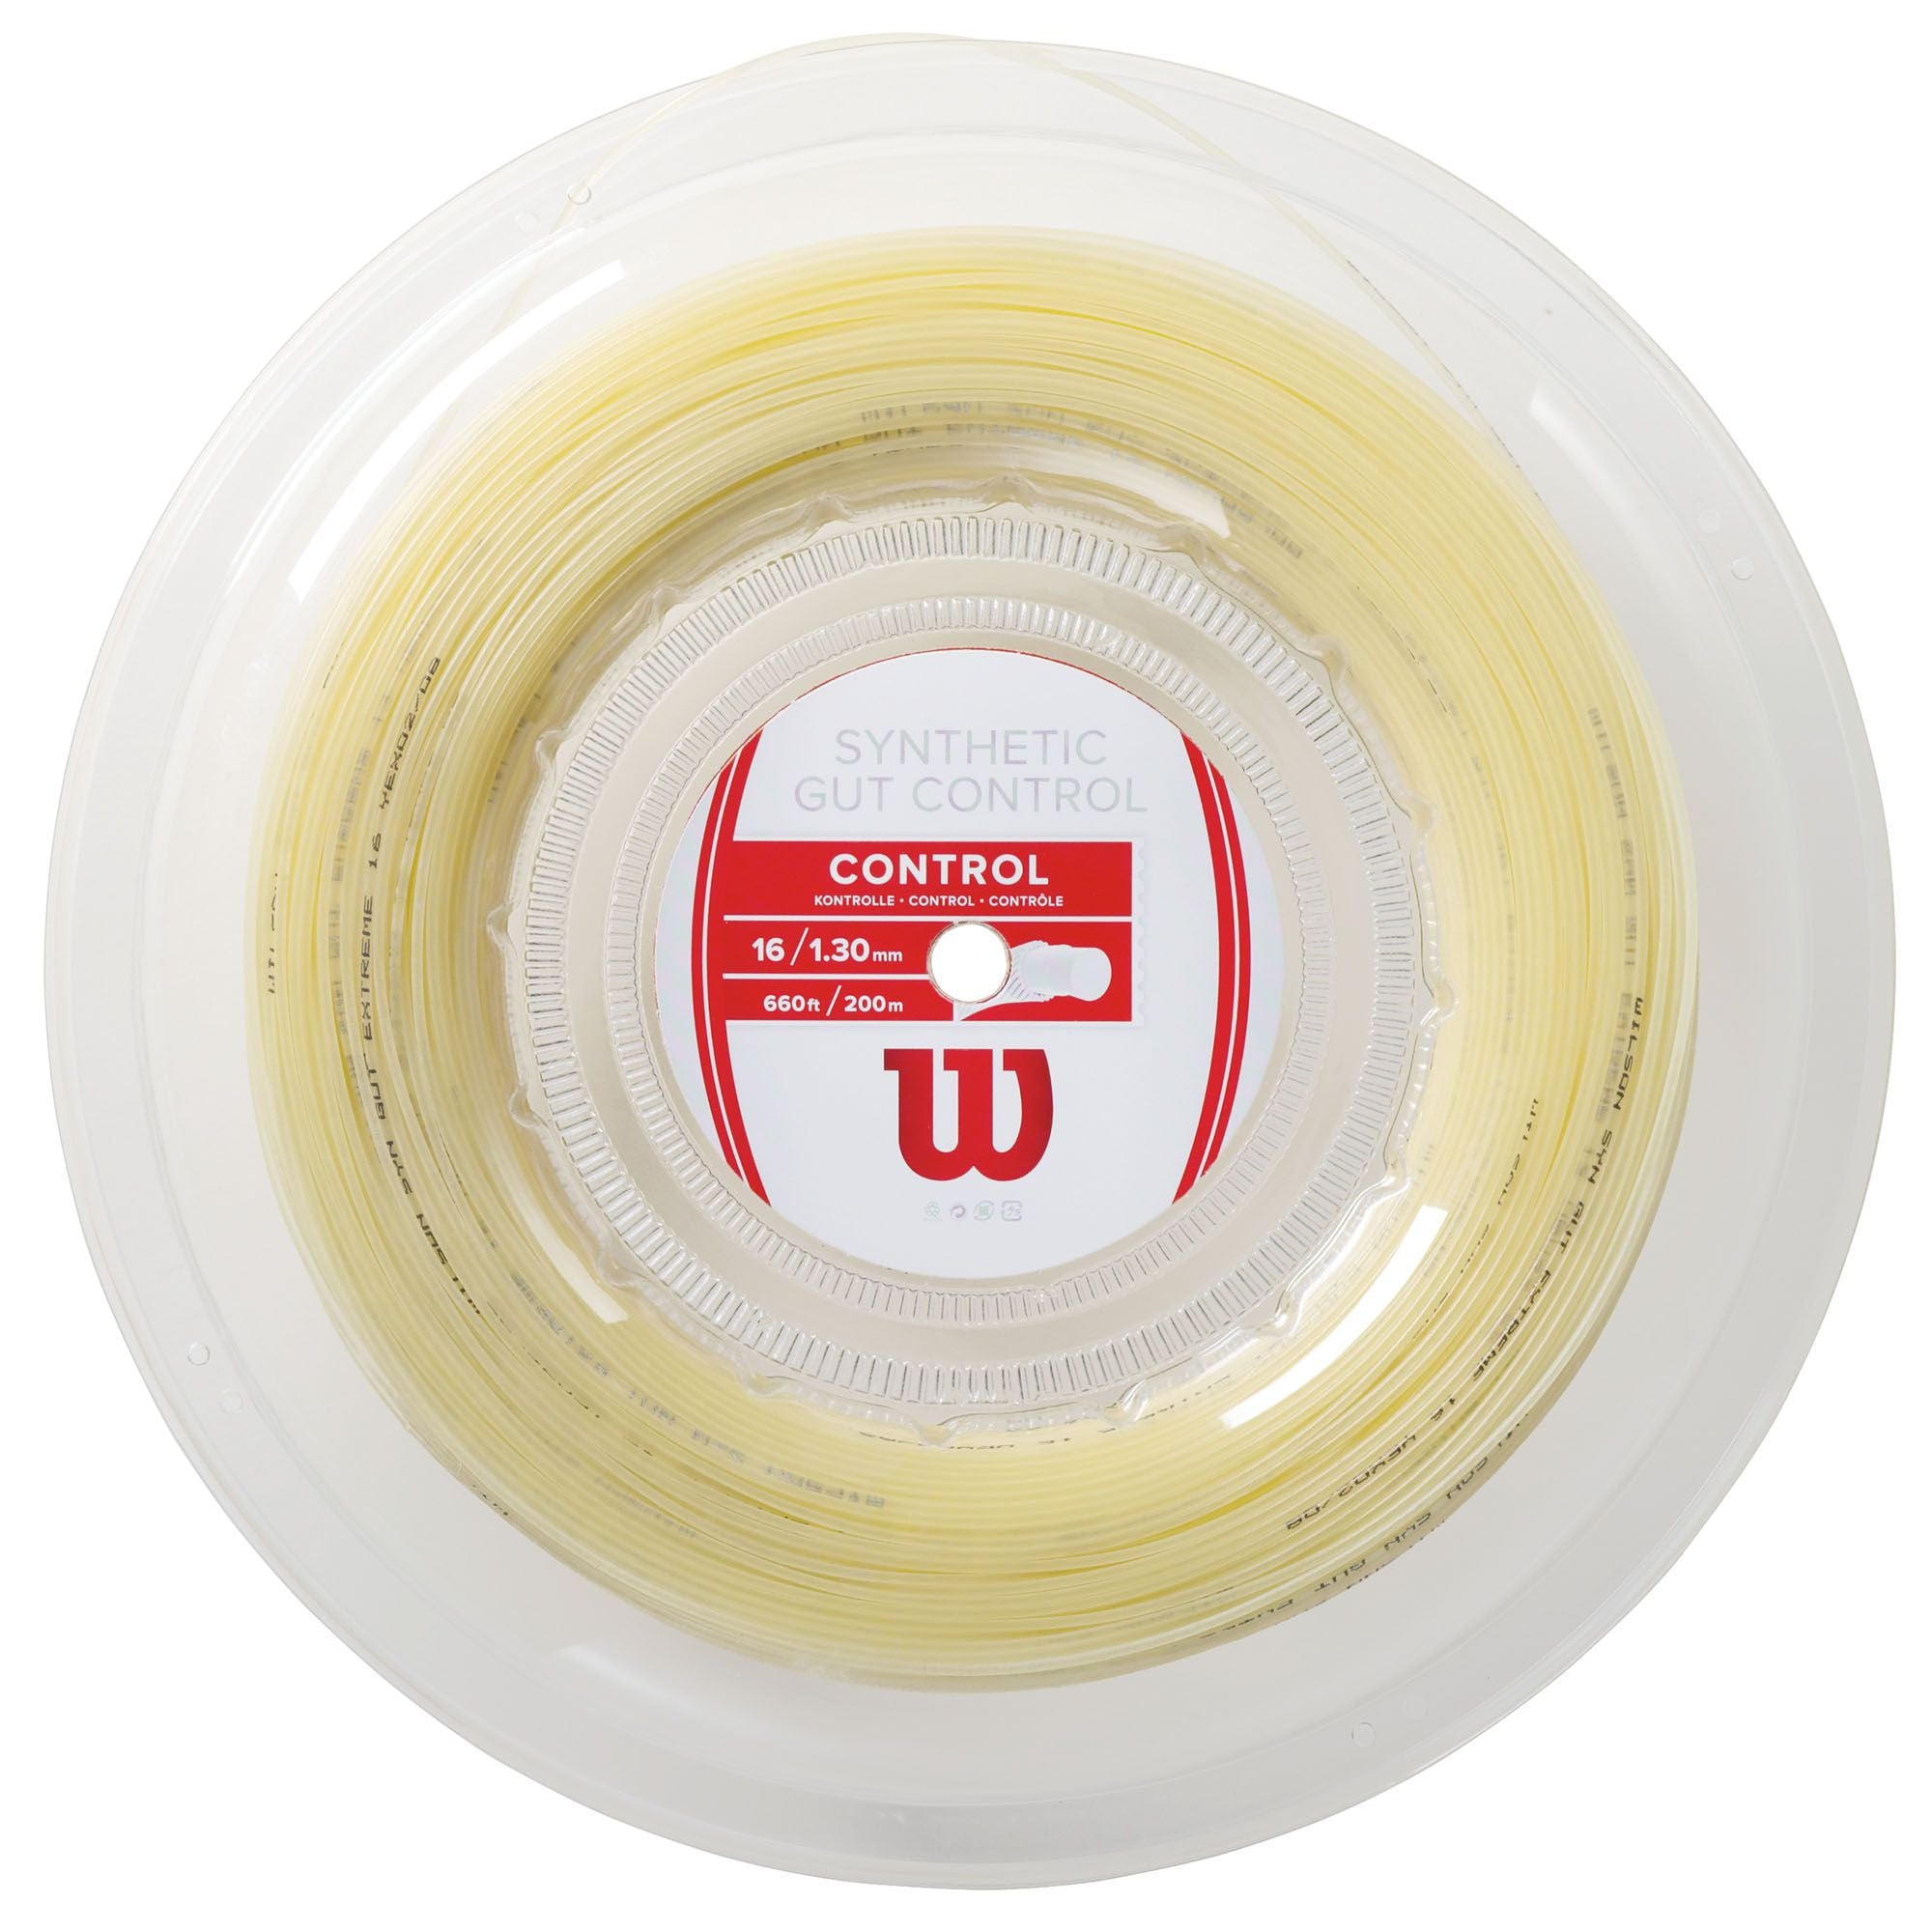 Buy Wilson Synthetic Gut Duramax String Reel 200m White online